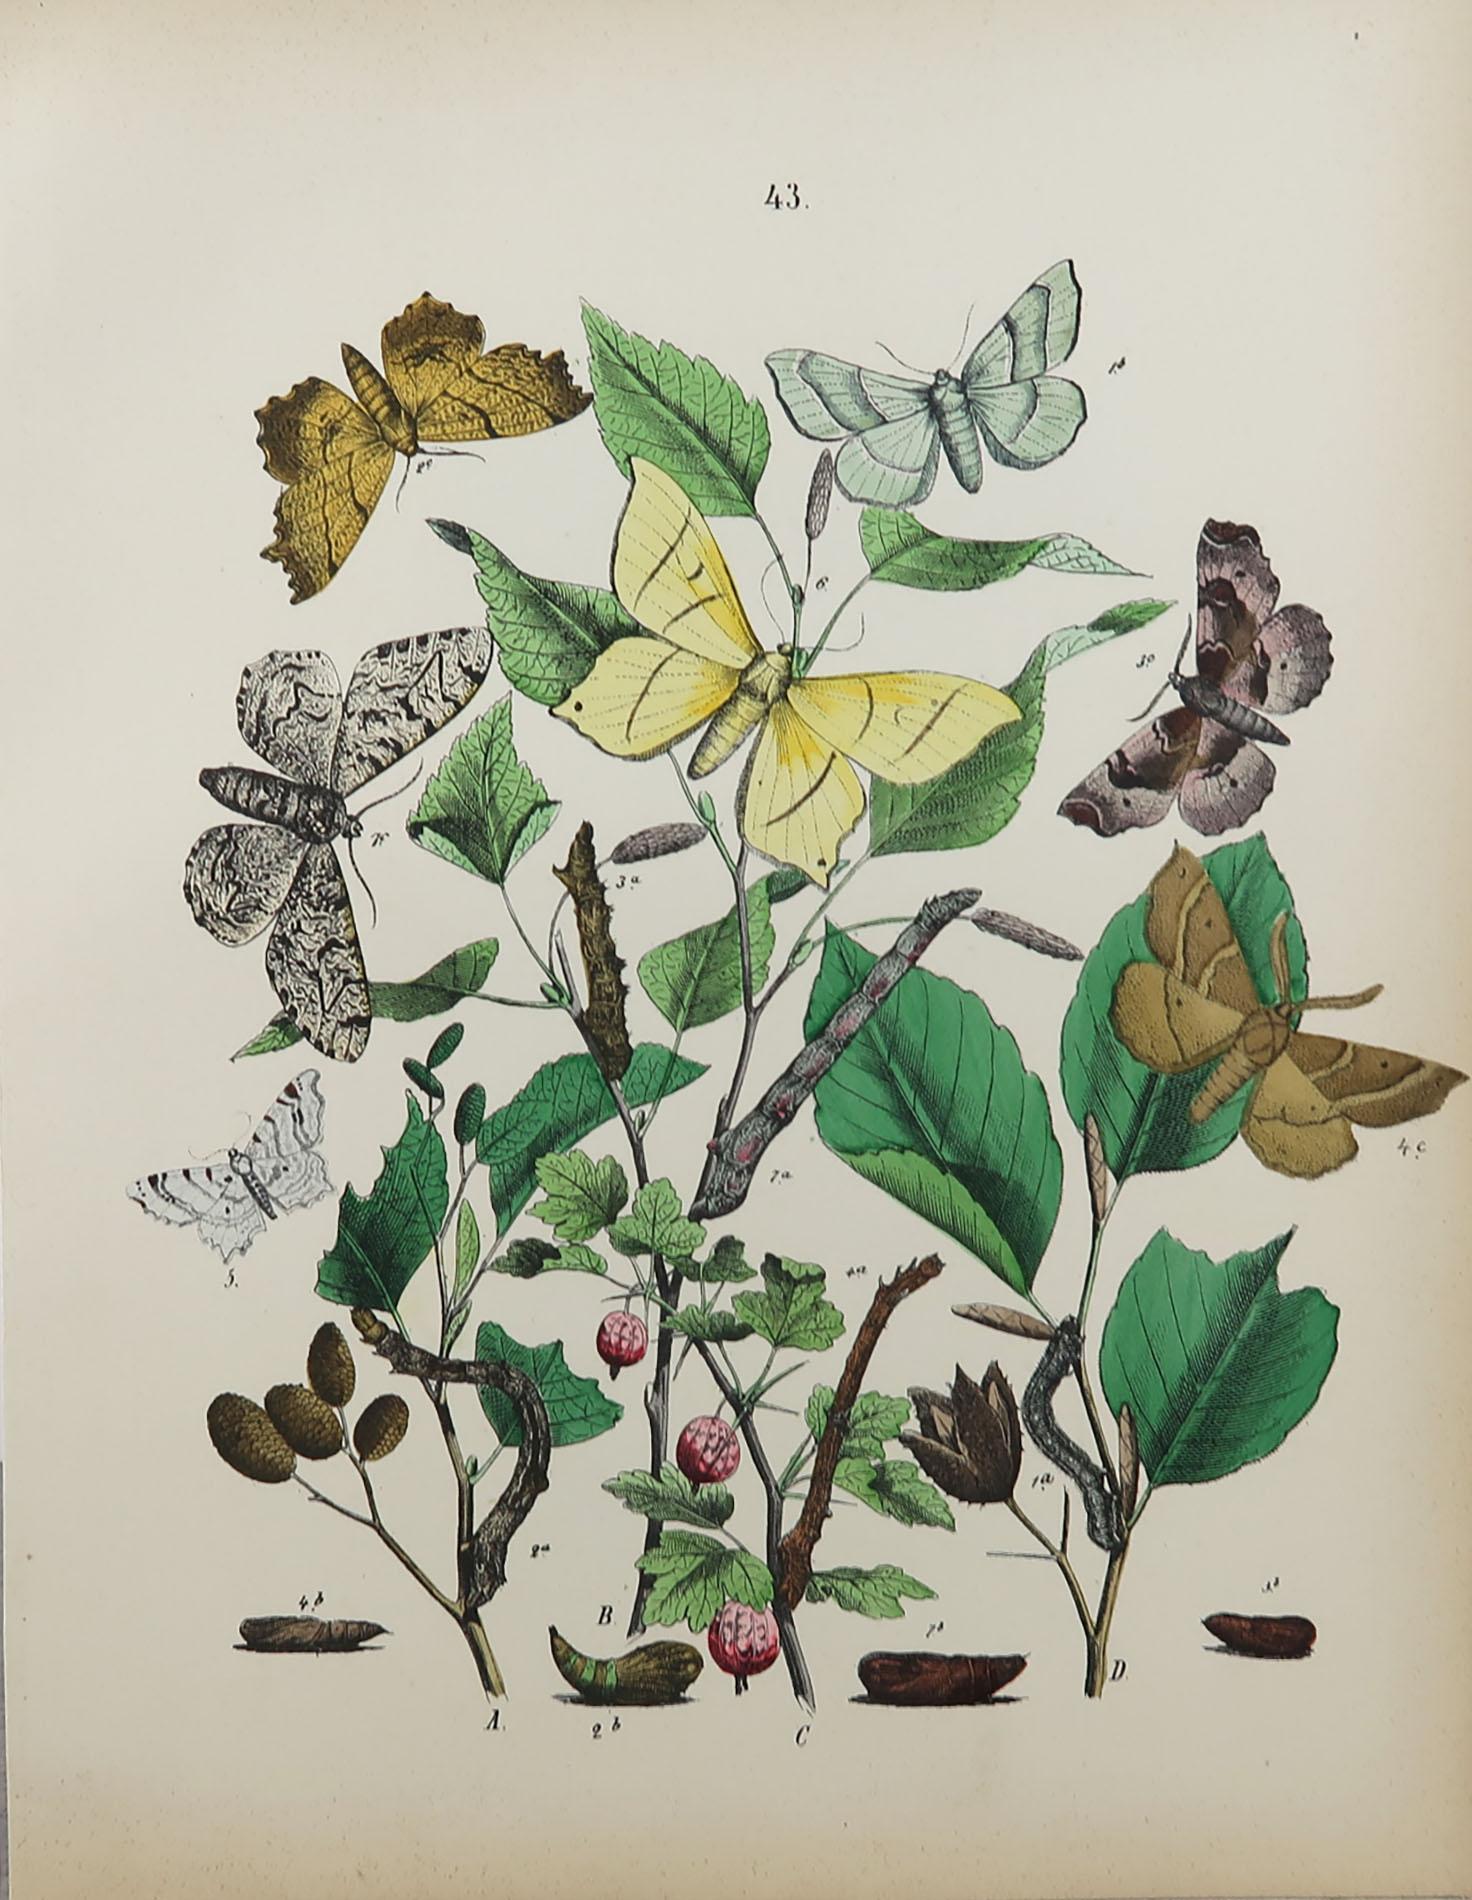 English Set of 15 Original Antique Prints of Butterflies, circa 1880